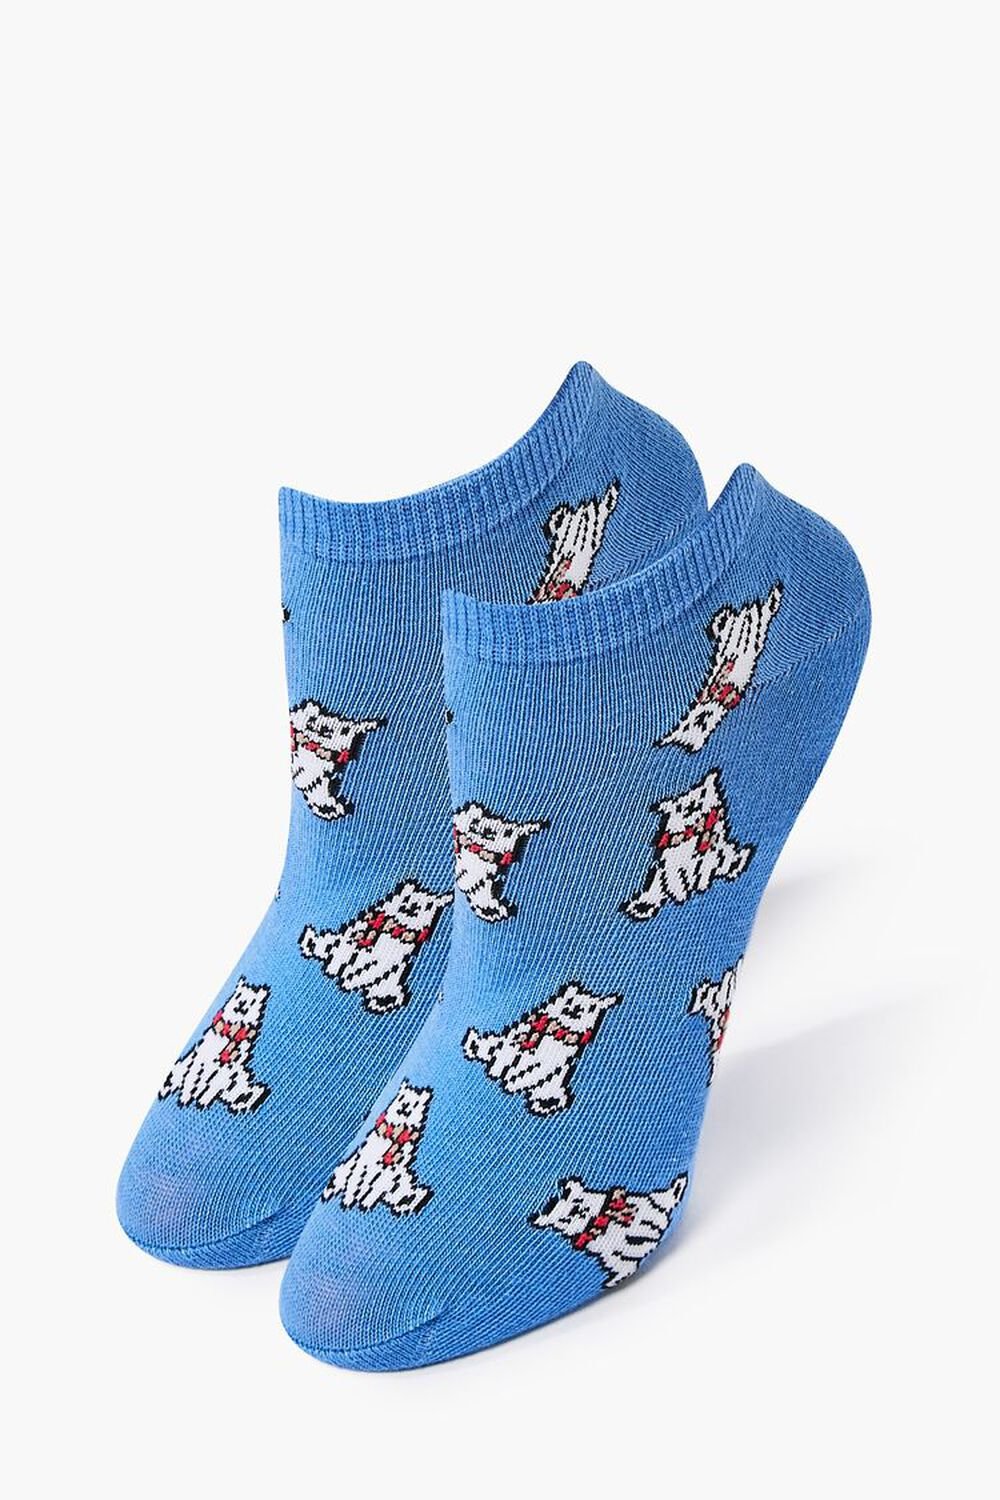 BLUE/MULTI Polar Bear Ankle Socks, image 1